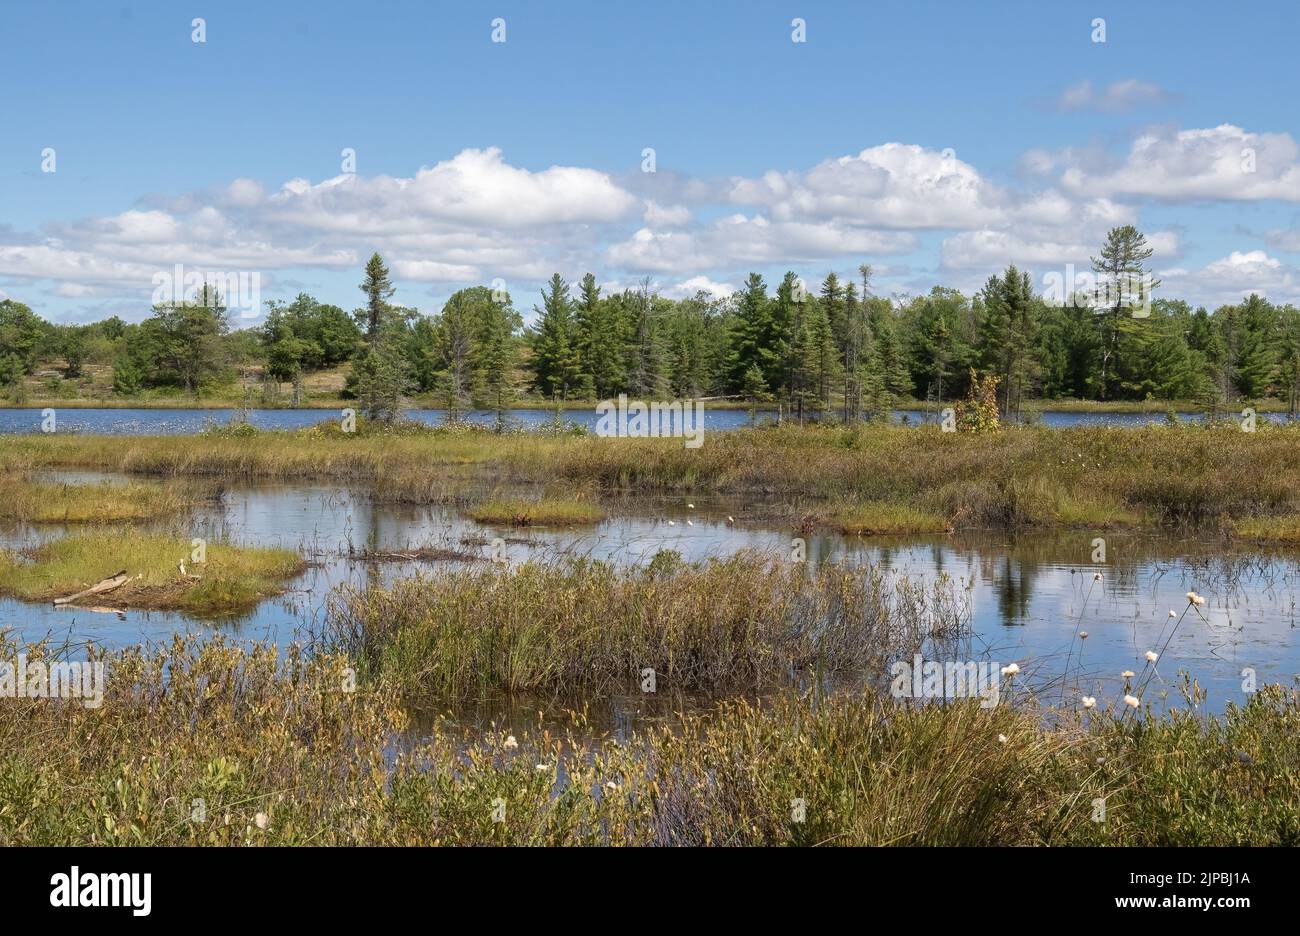 Wetlands and surrounding vegetation at Torrance Barrens nature preserve in Muskoka. Stock Photo